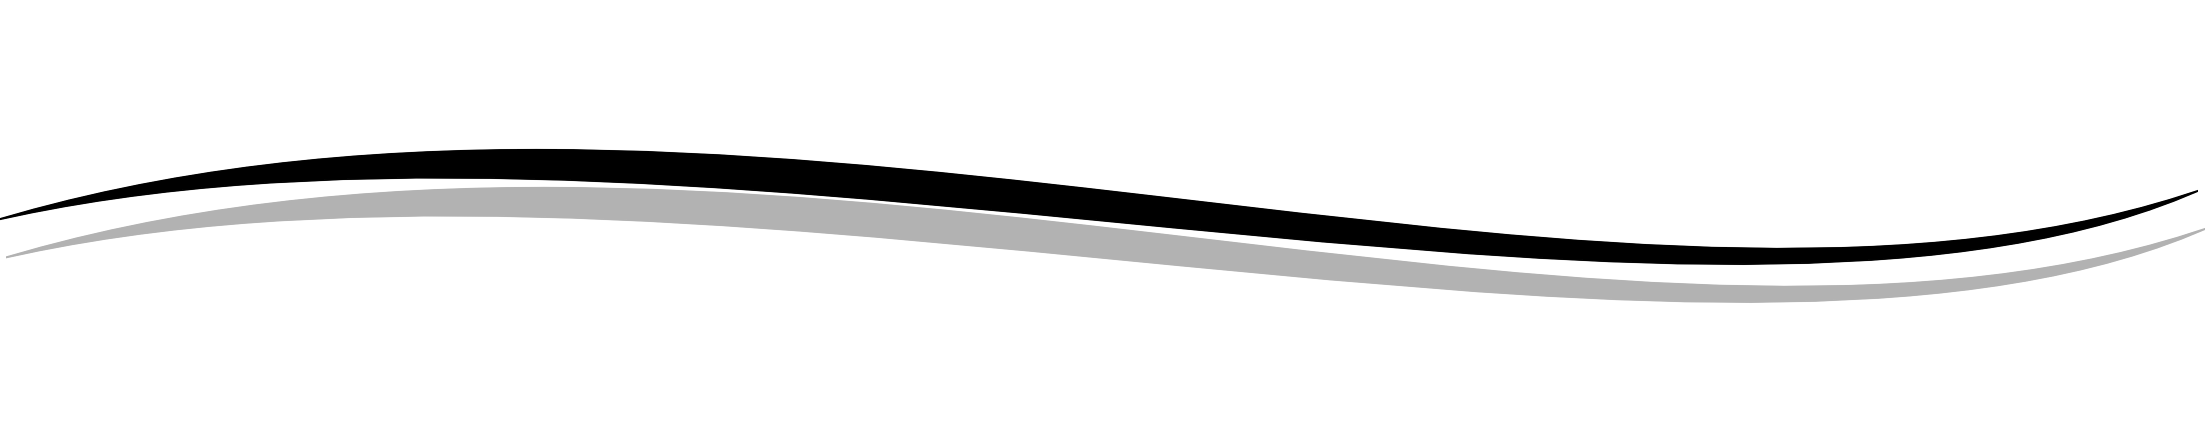 Horizontal-line-clipart